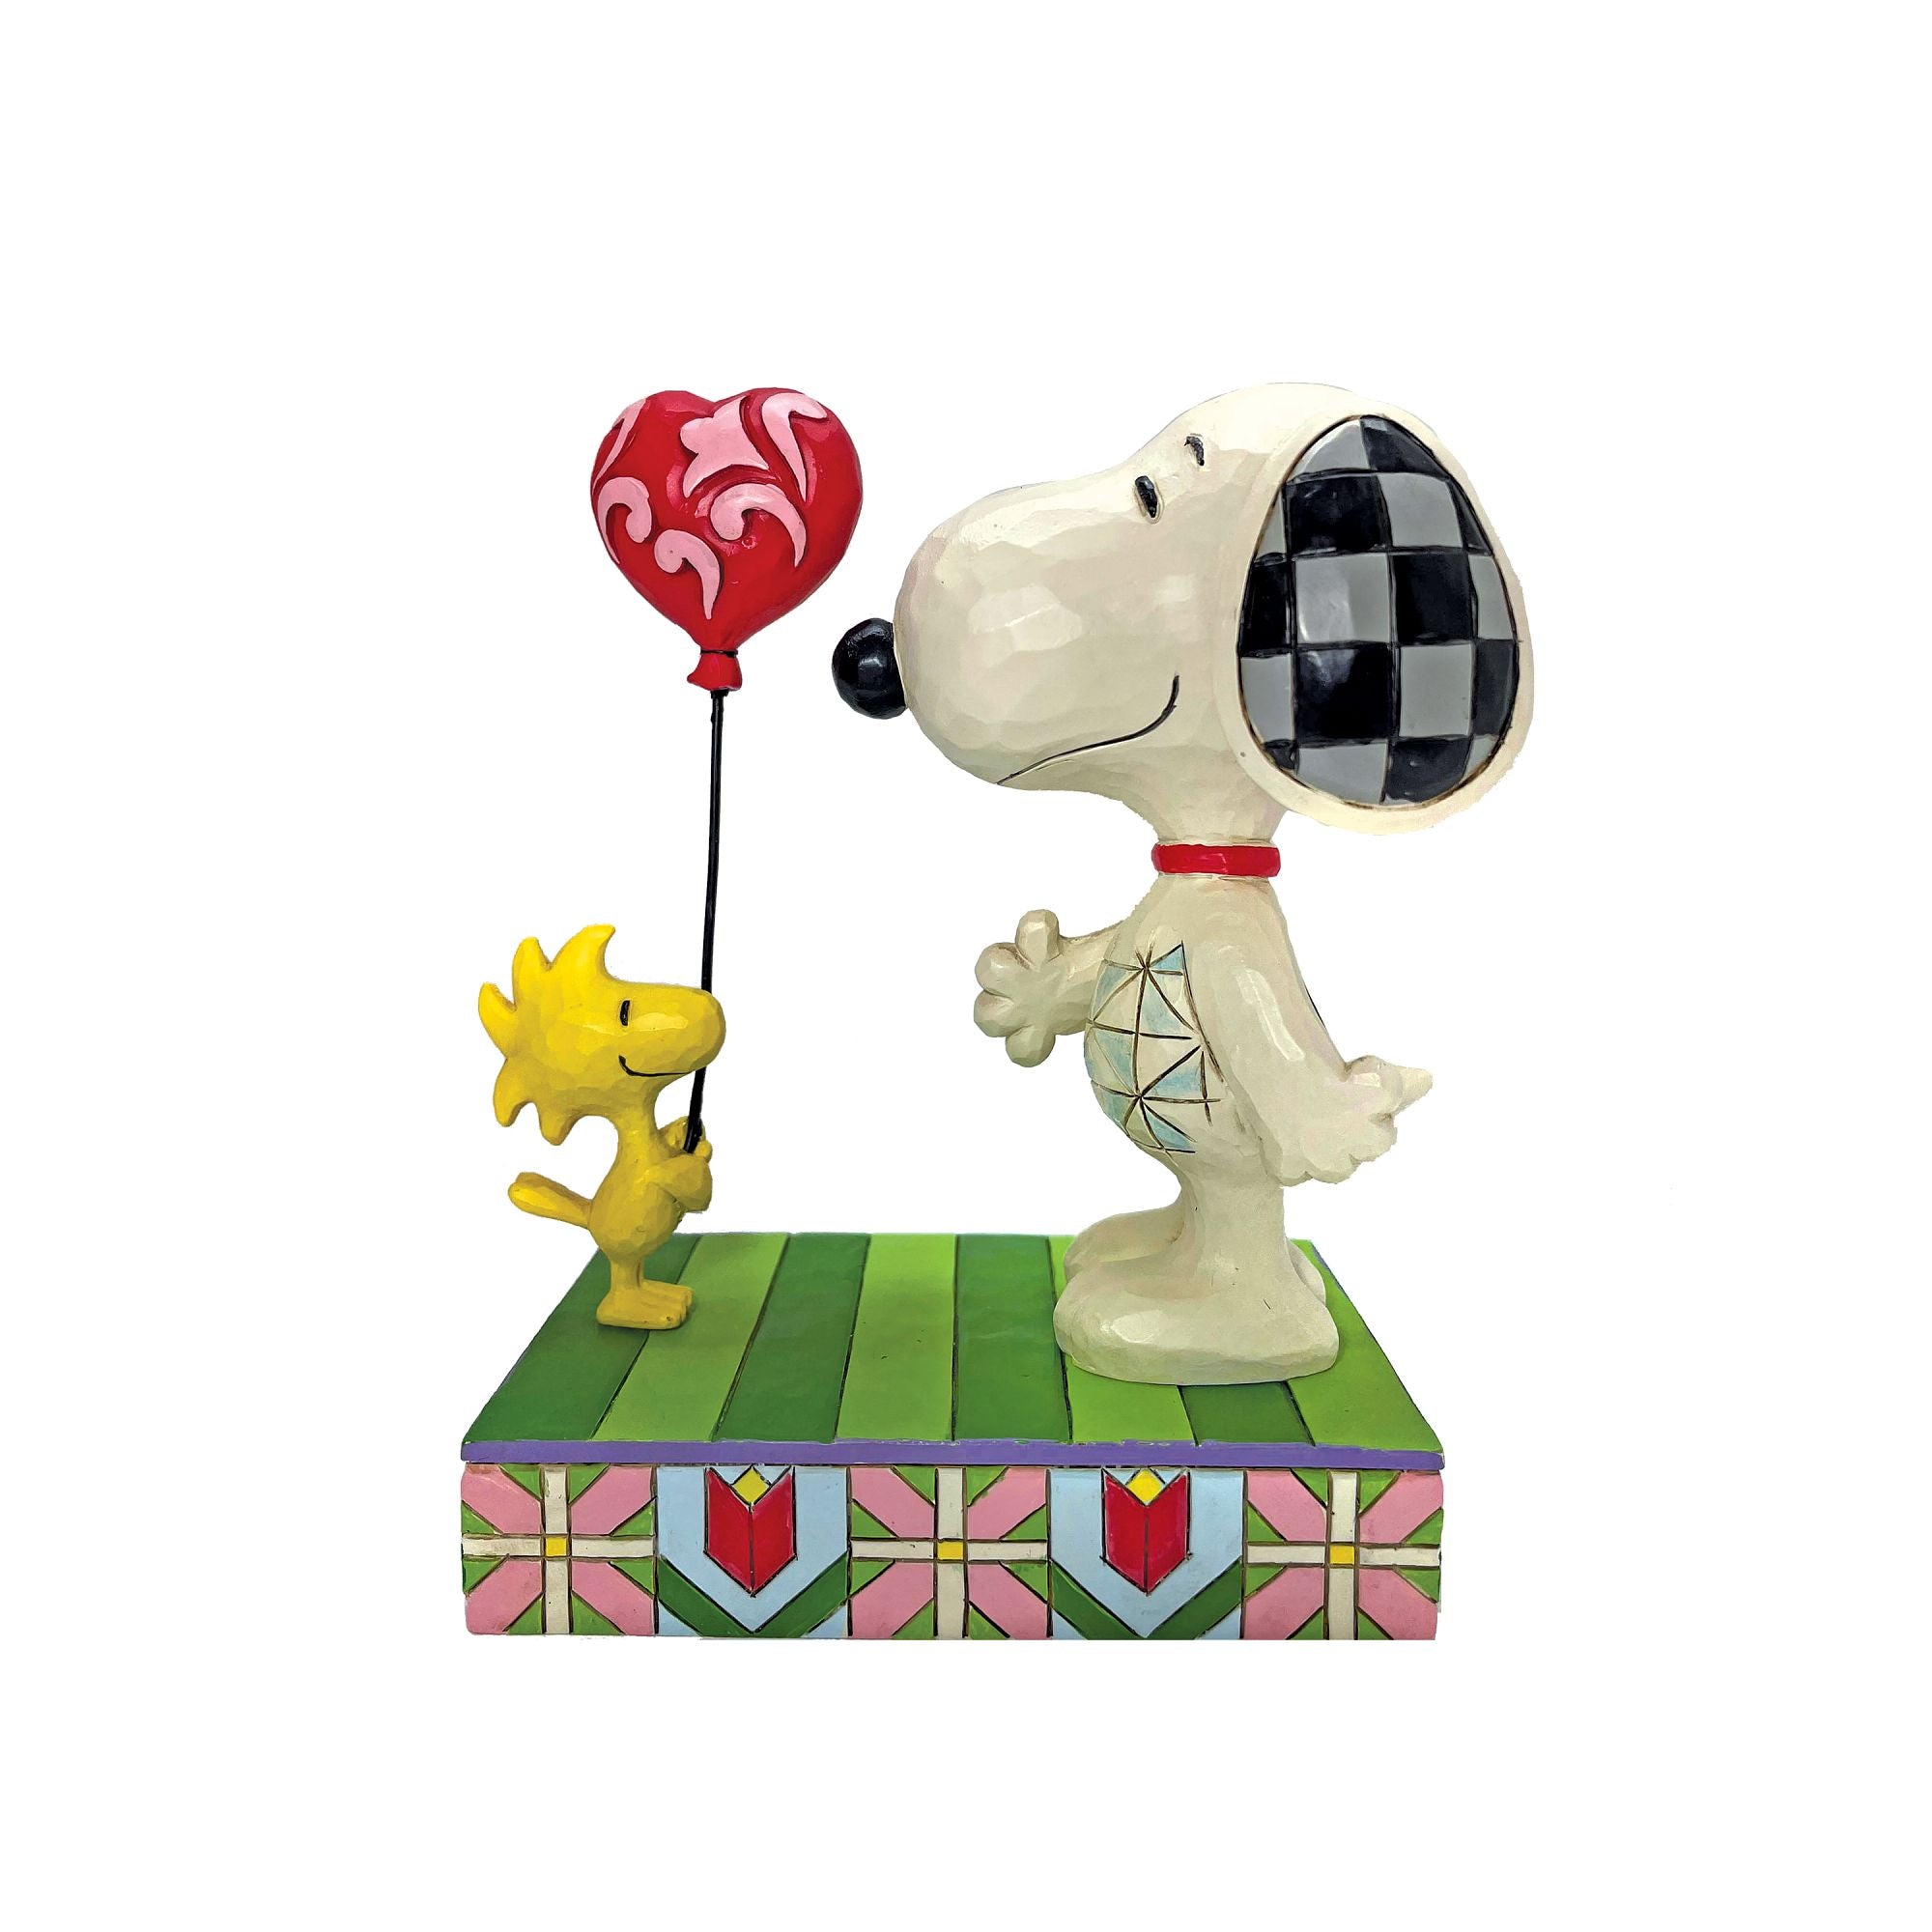 Woodstock giving Snoopy Heart – Jim Shore